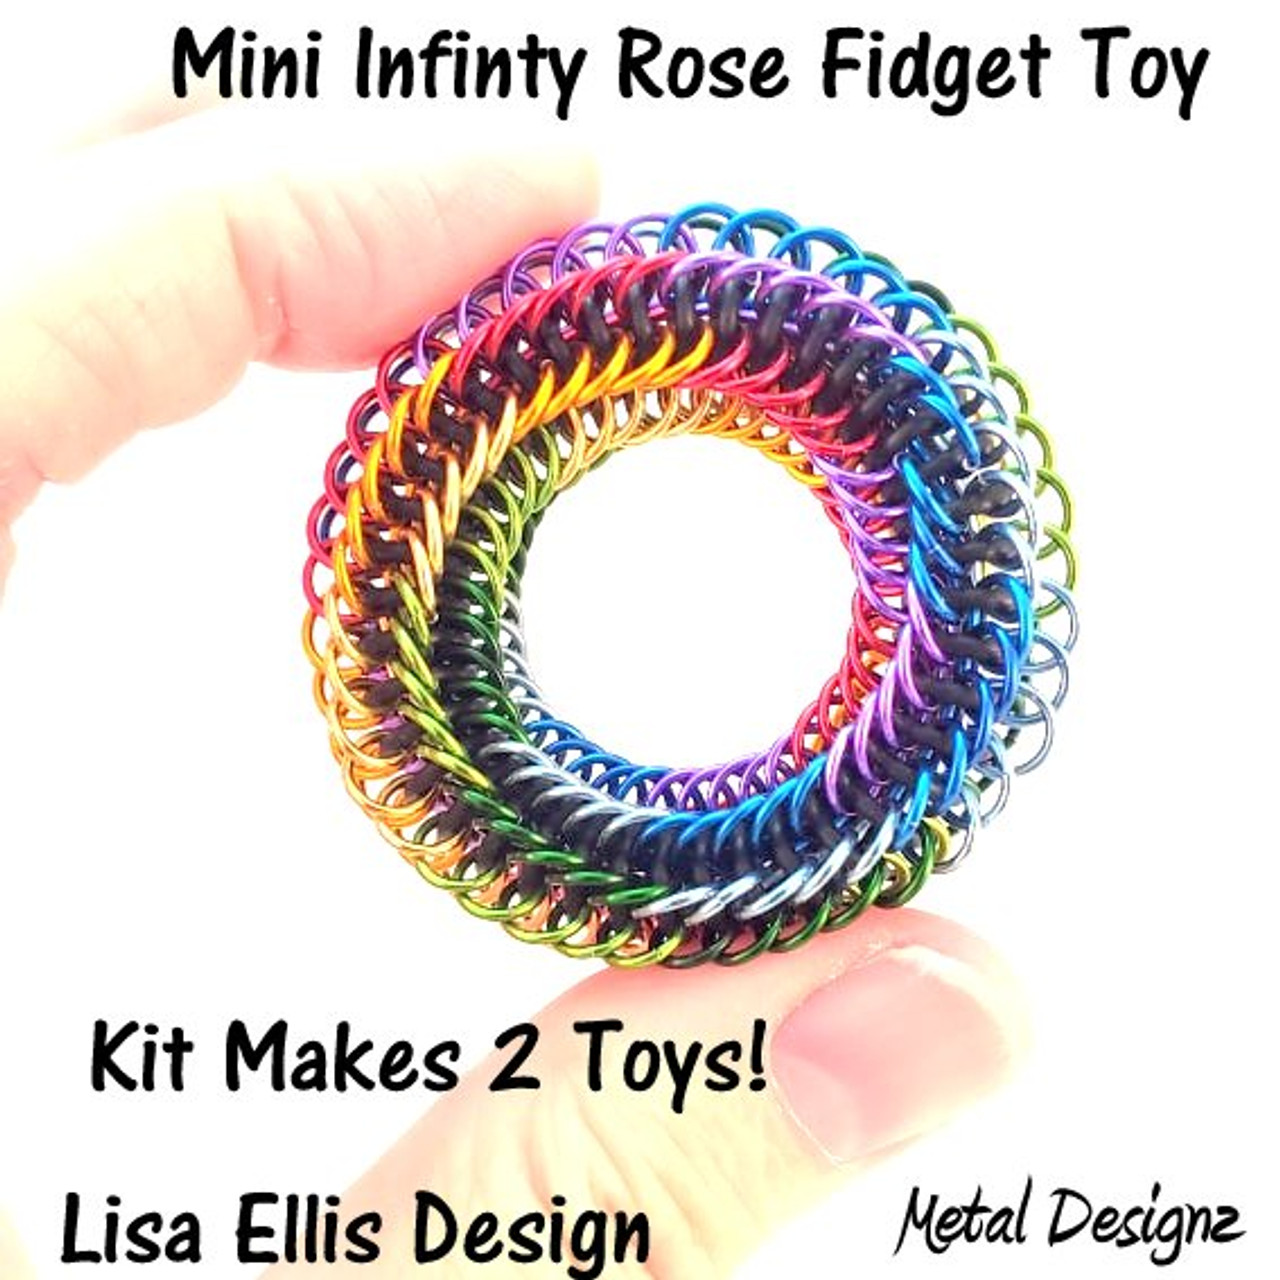 New Mini Rainbow Infinity Rose Fidget Kit - Makes 2 toys - Metal Designz